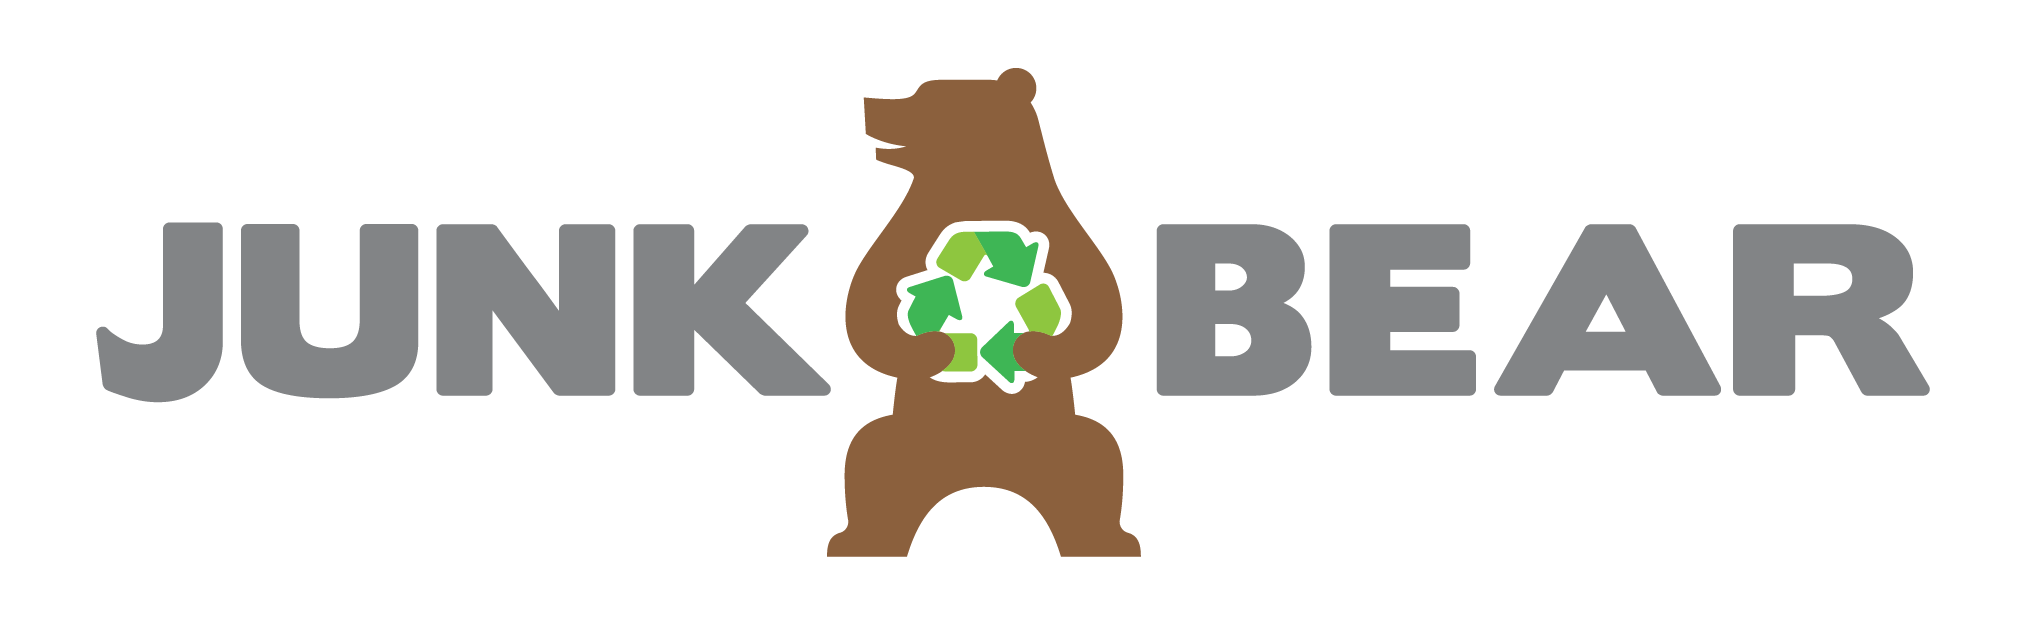 Junk bear logo